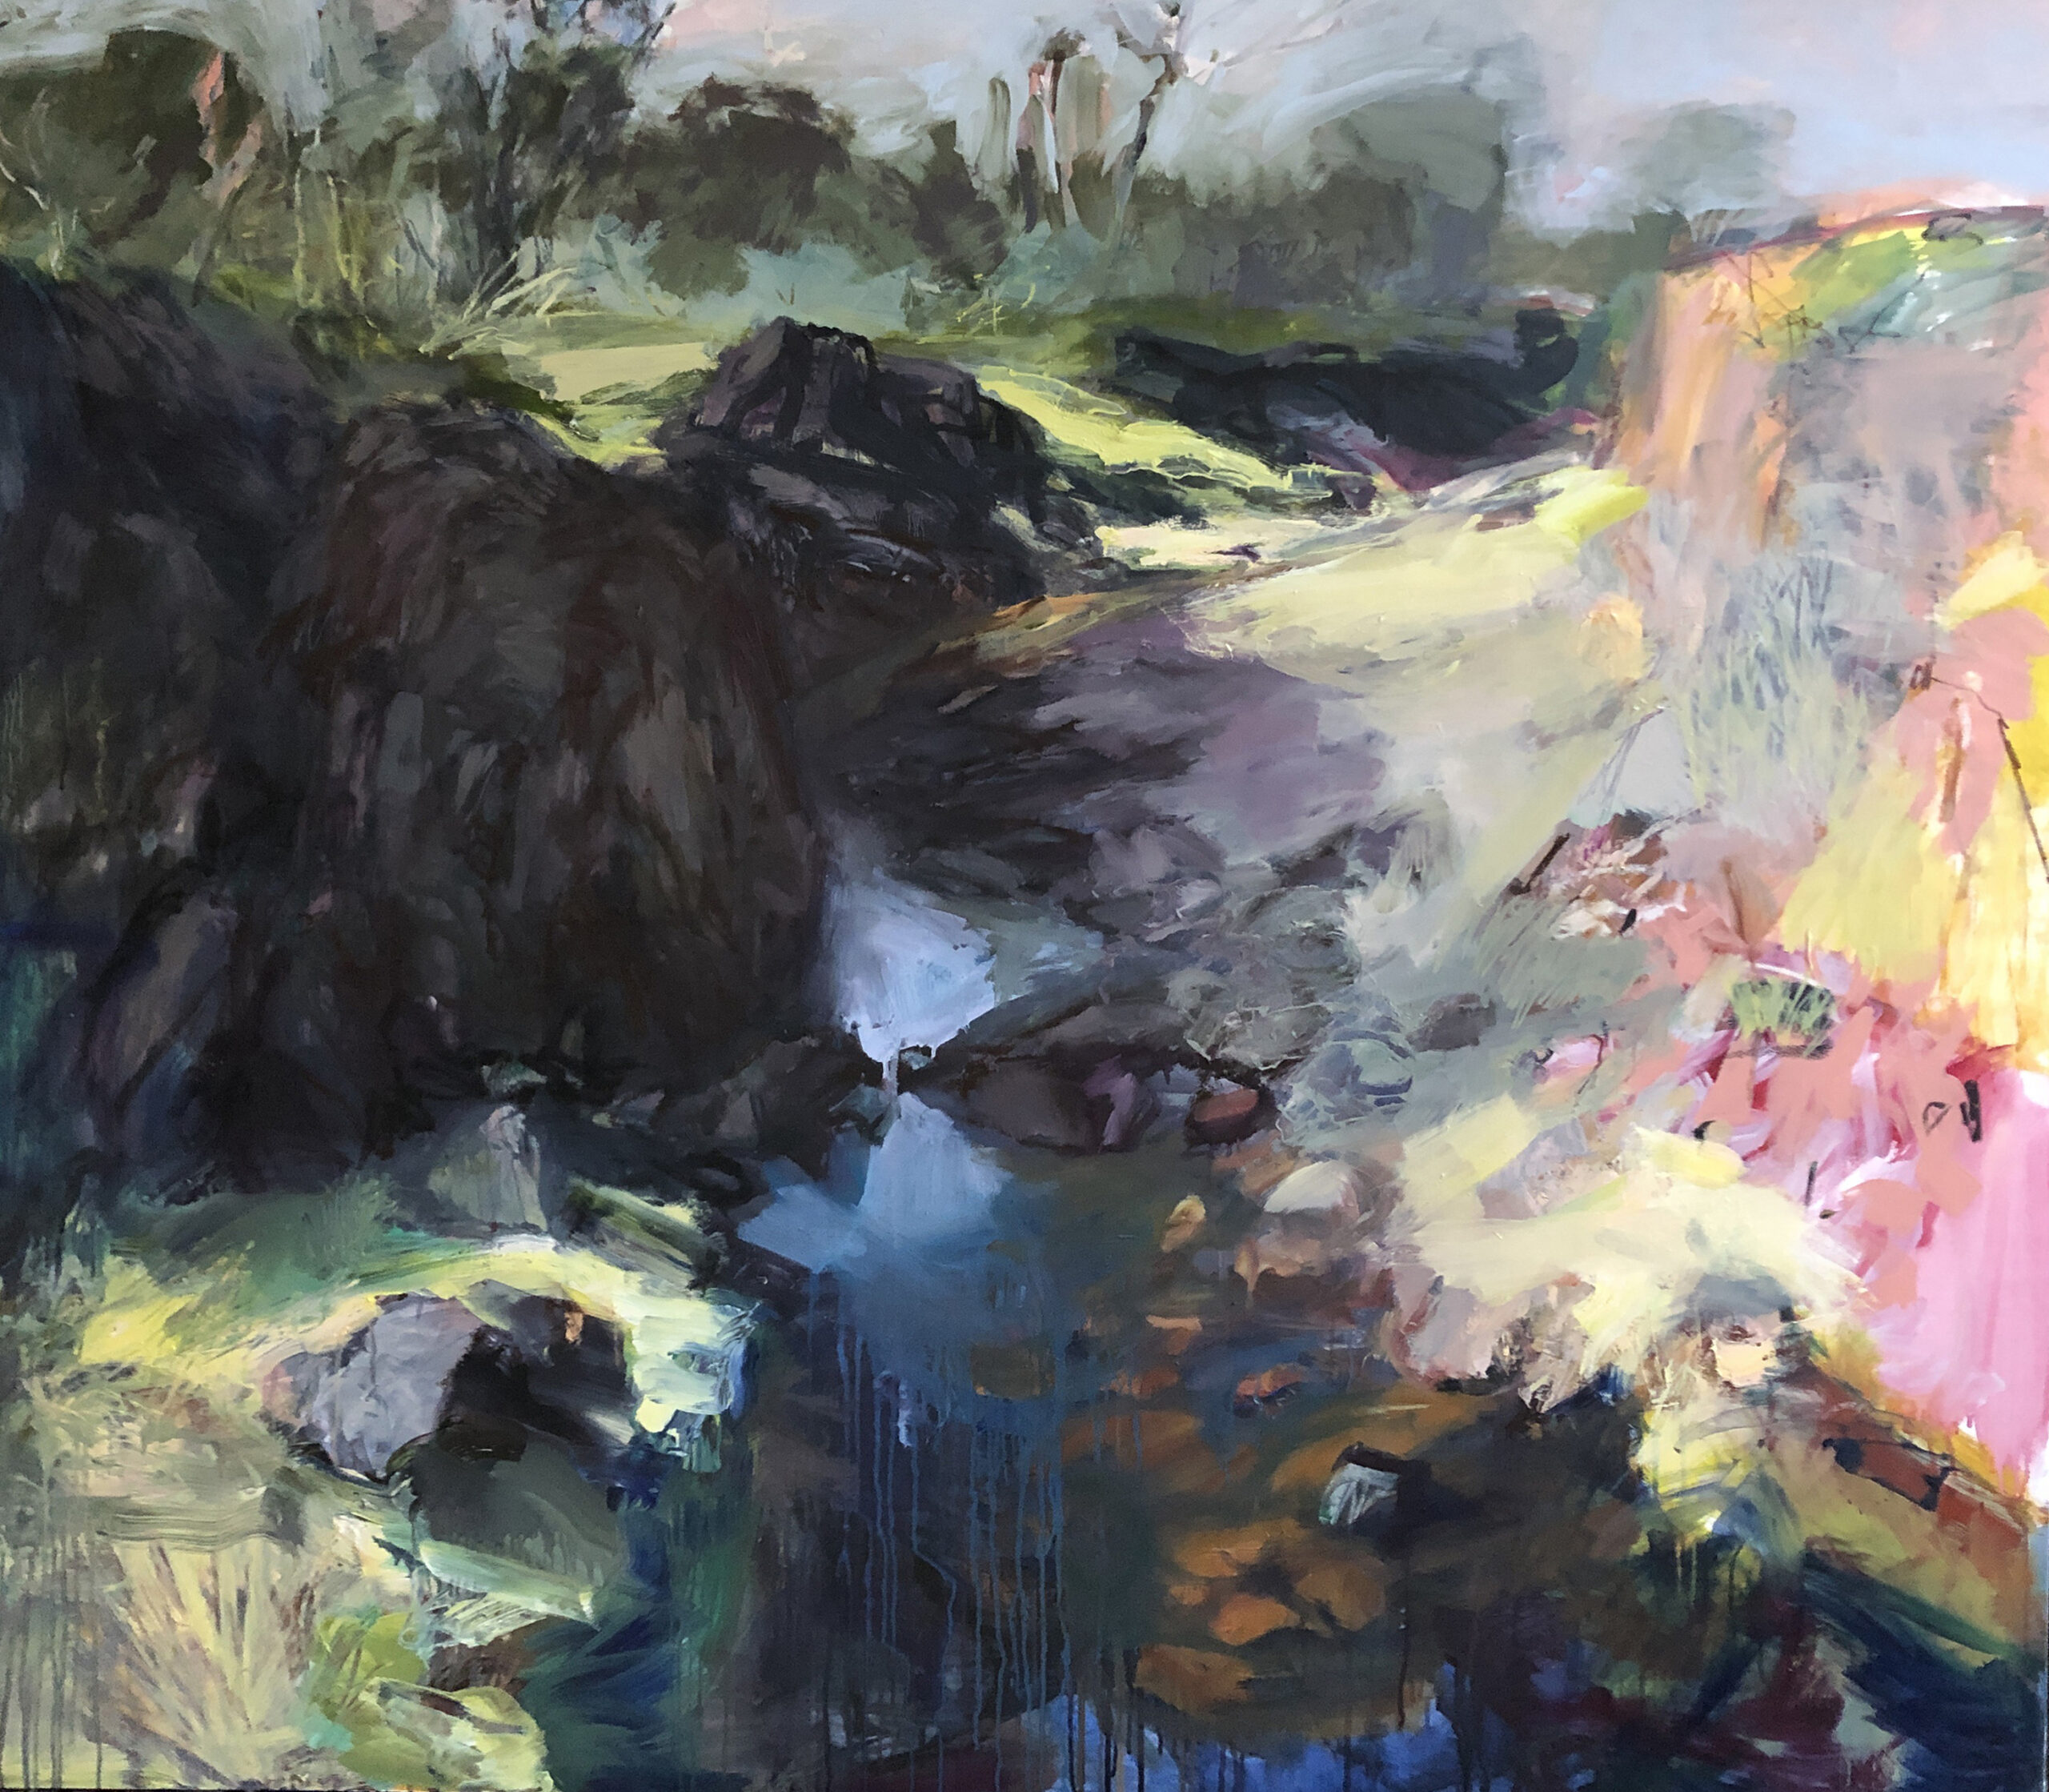 Kerry McInnis 'The Creek Narrows' Oil on Canvas 152 x 168cm $17,500